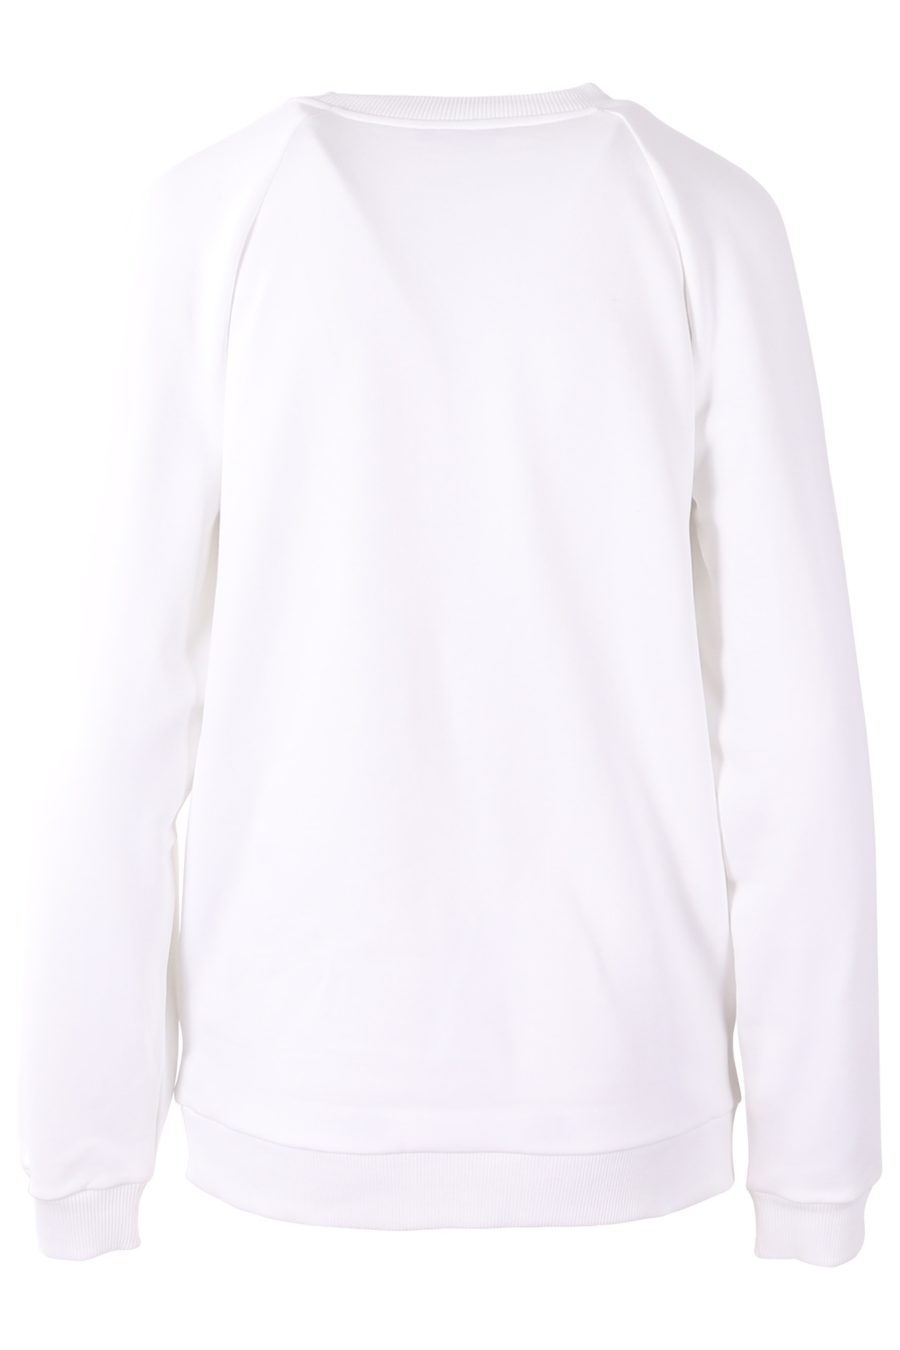 Sweatshirt Balmain blanc avec logo rose - 79f9c4c59e6af80aa2ab95e20febbaa966f56c70